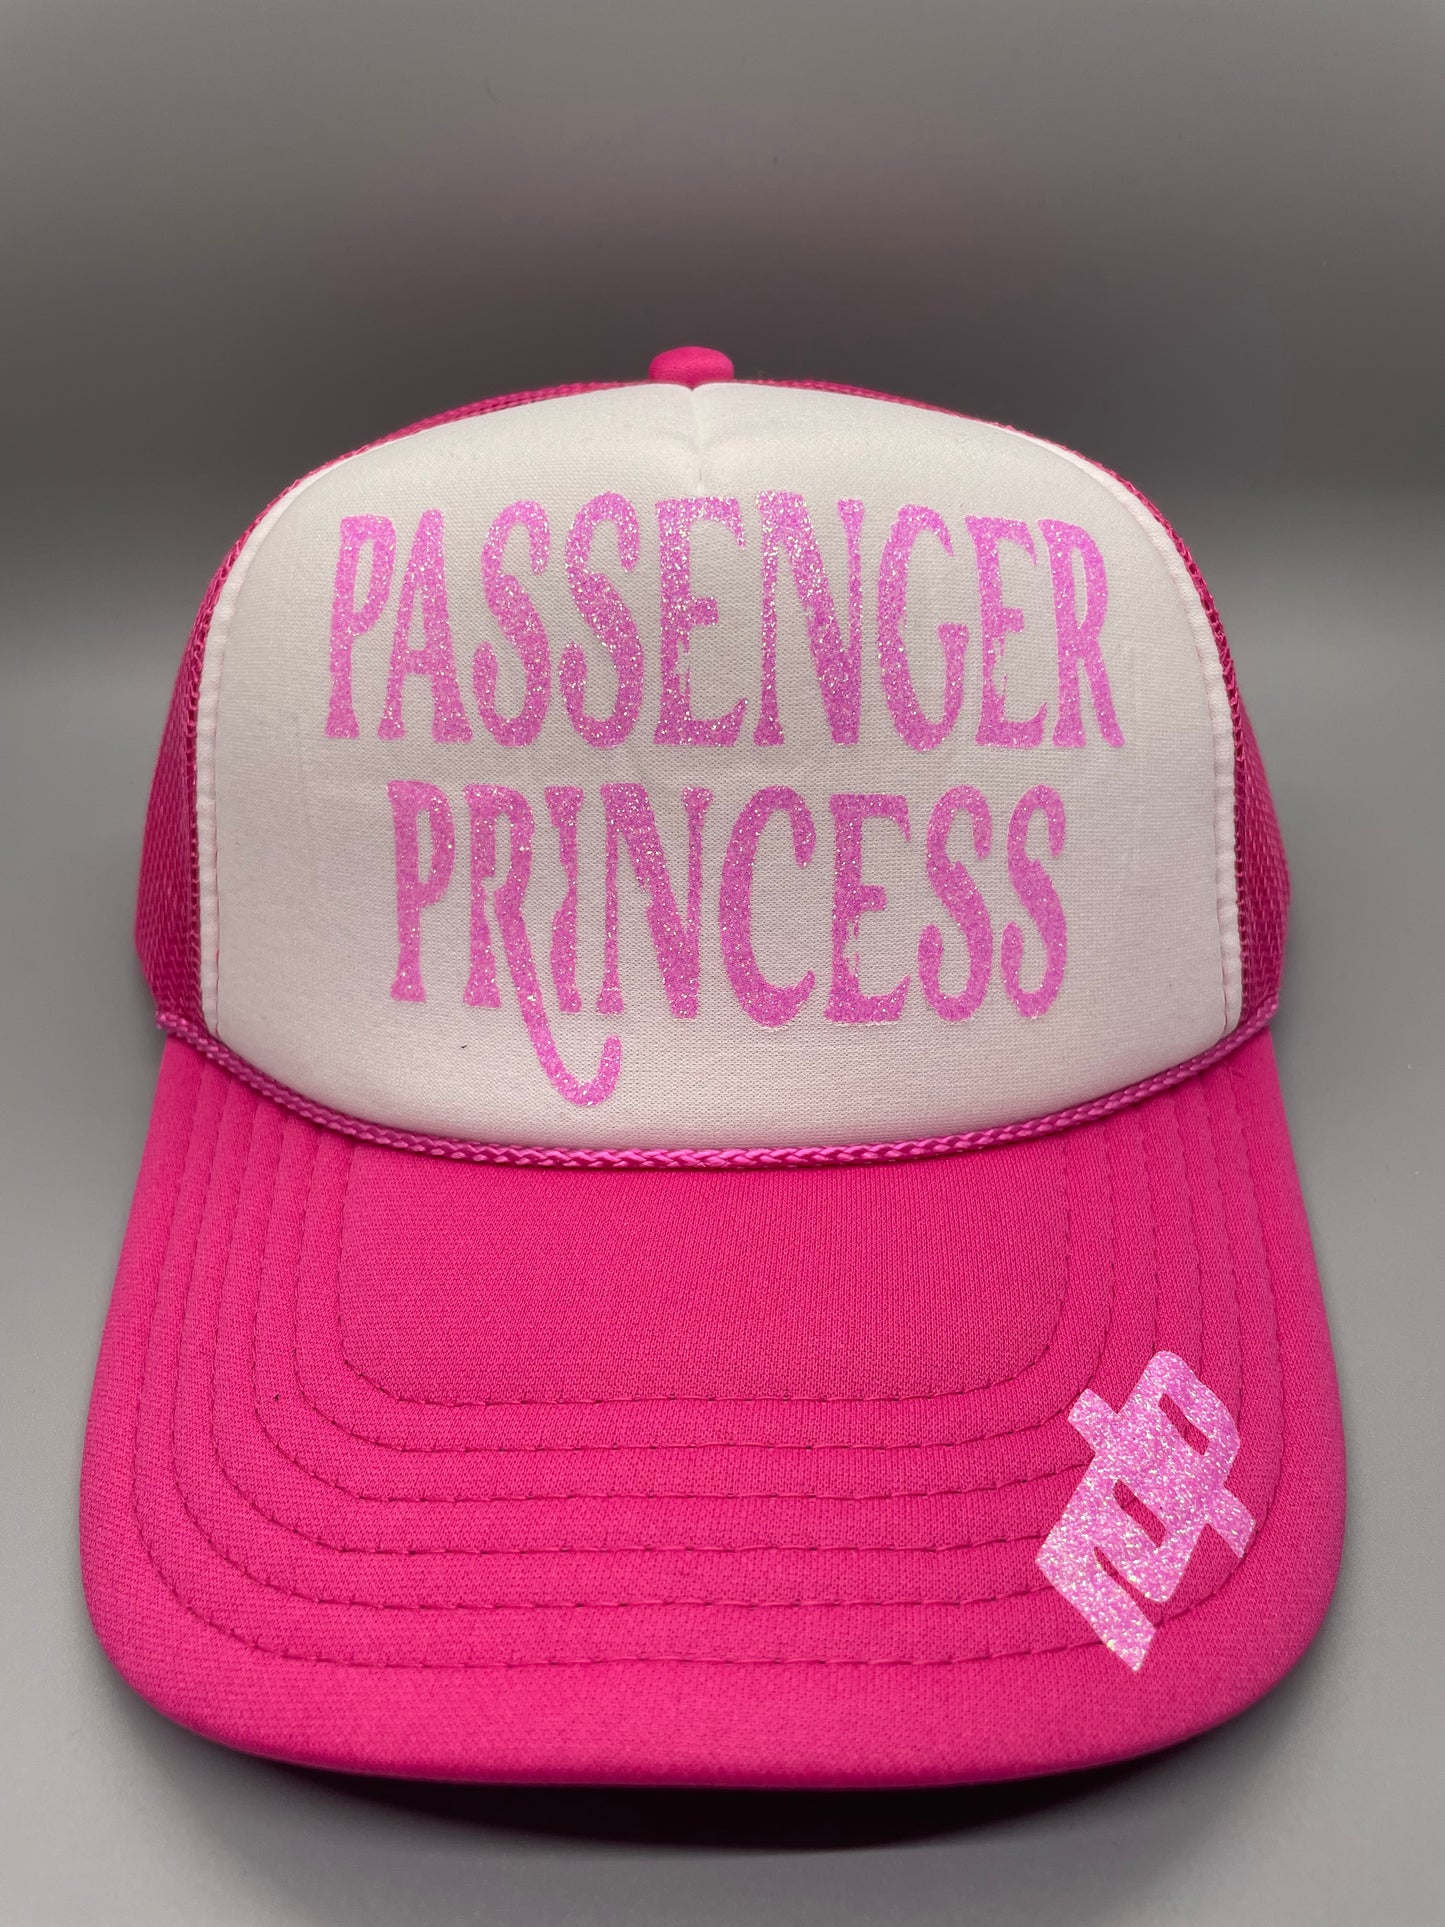 Women's 'Passenger Princess' Hat